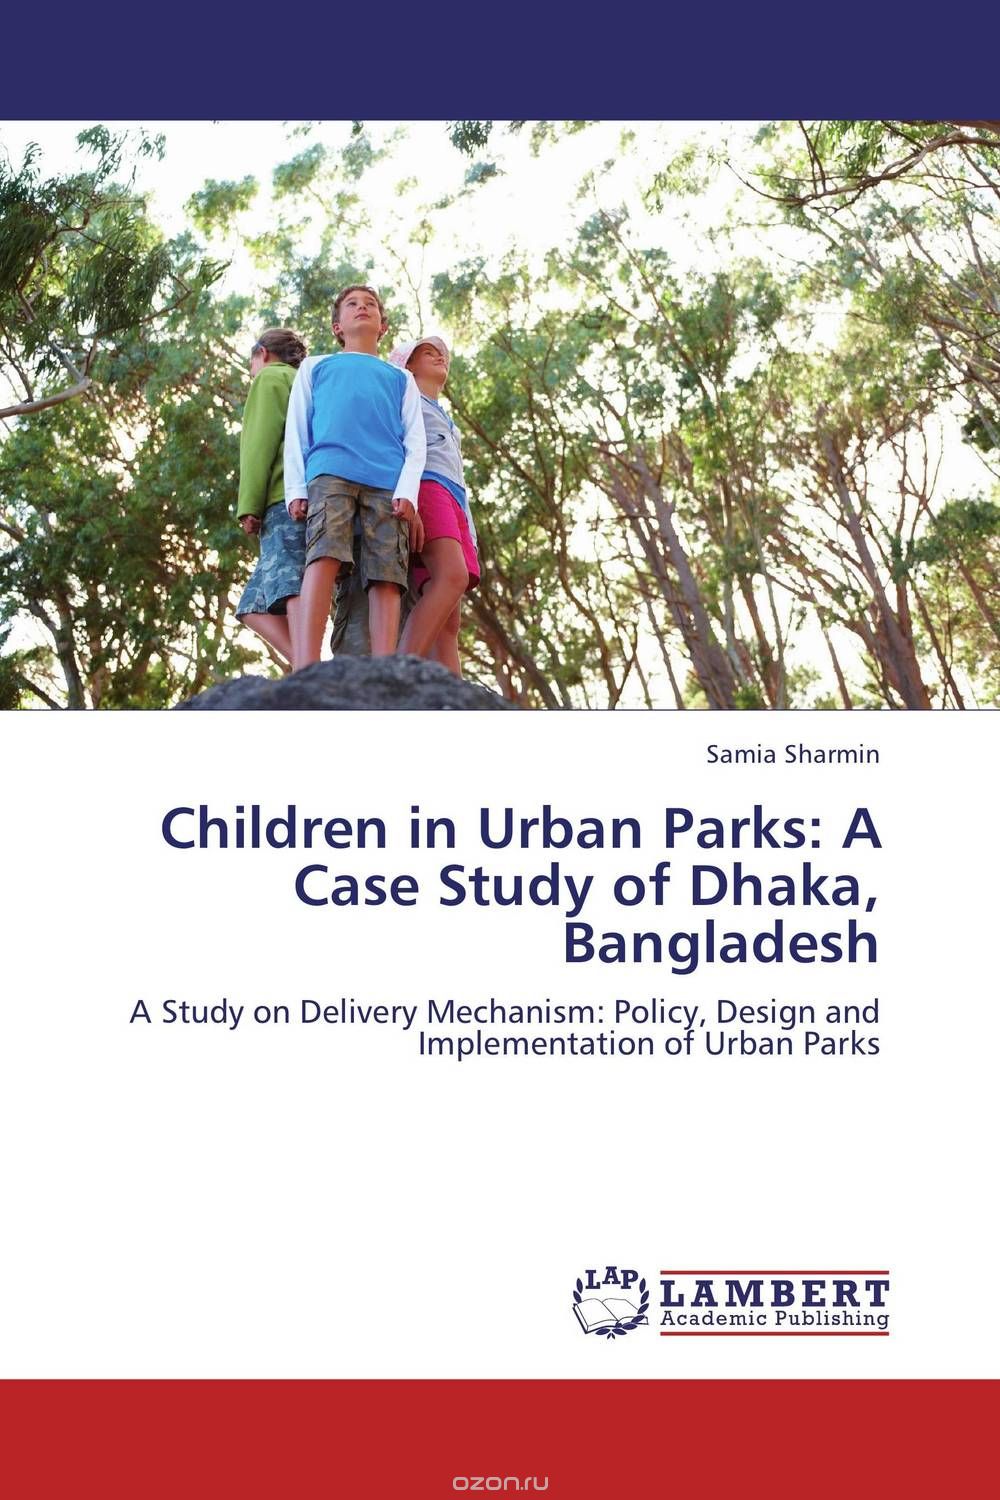 Скачать книгу "Children in Urban Parks: A Case Study of Dhaka, Bangladesh"